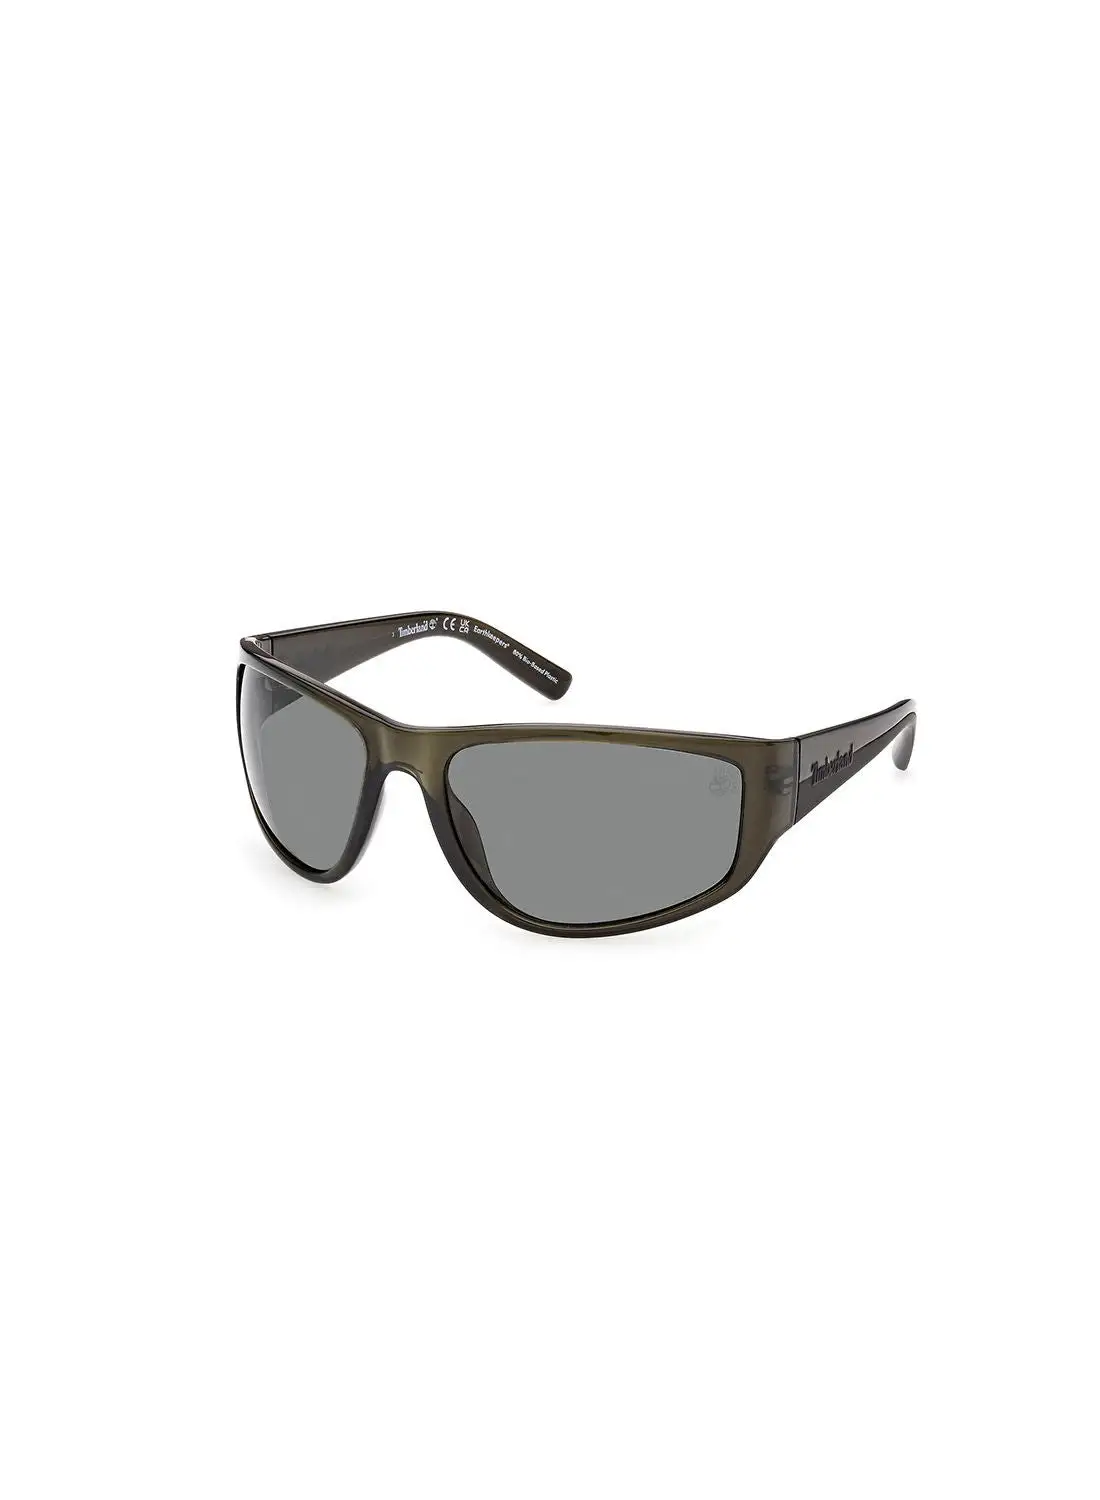 Timberland Men's Polarized Rectangular Sunglasses - TB928896R66 - Lens Size: 66 Mm